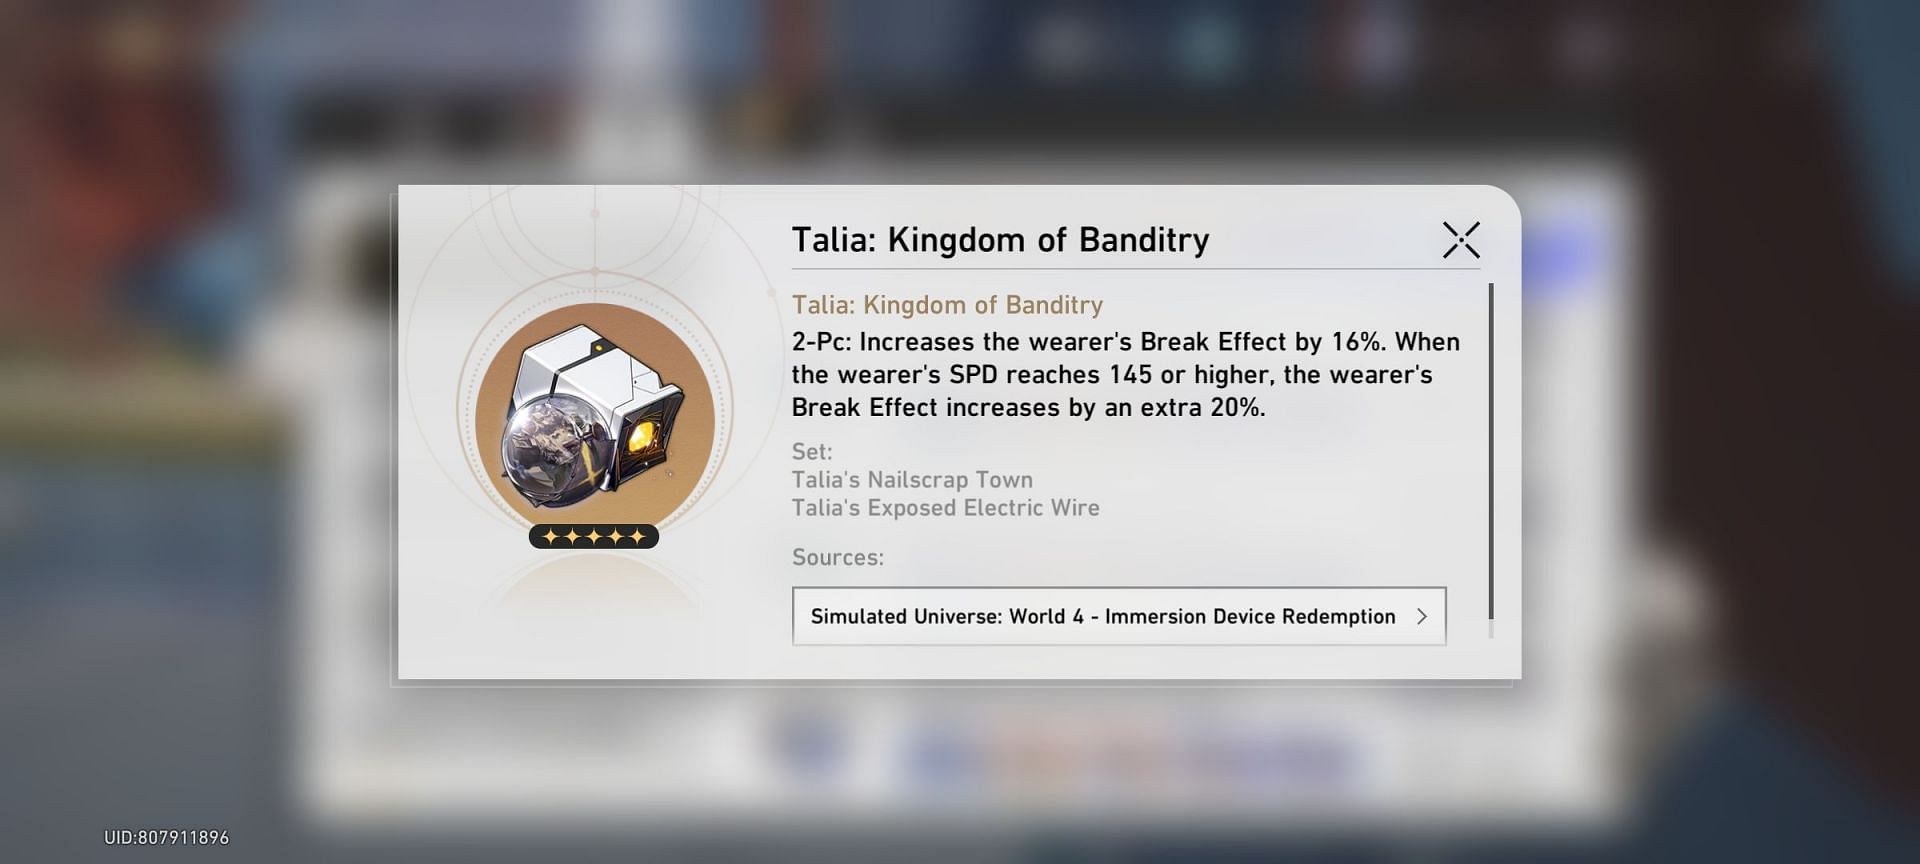 Talia: Kingdom of Banditry, a Planar Ornament set in Star Rail (Image via HoYoverse)